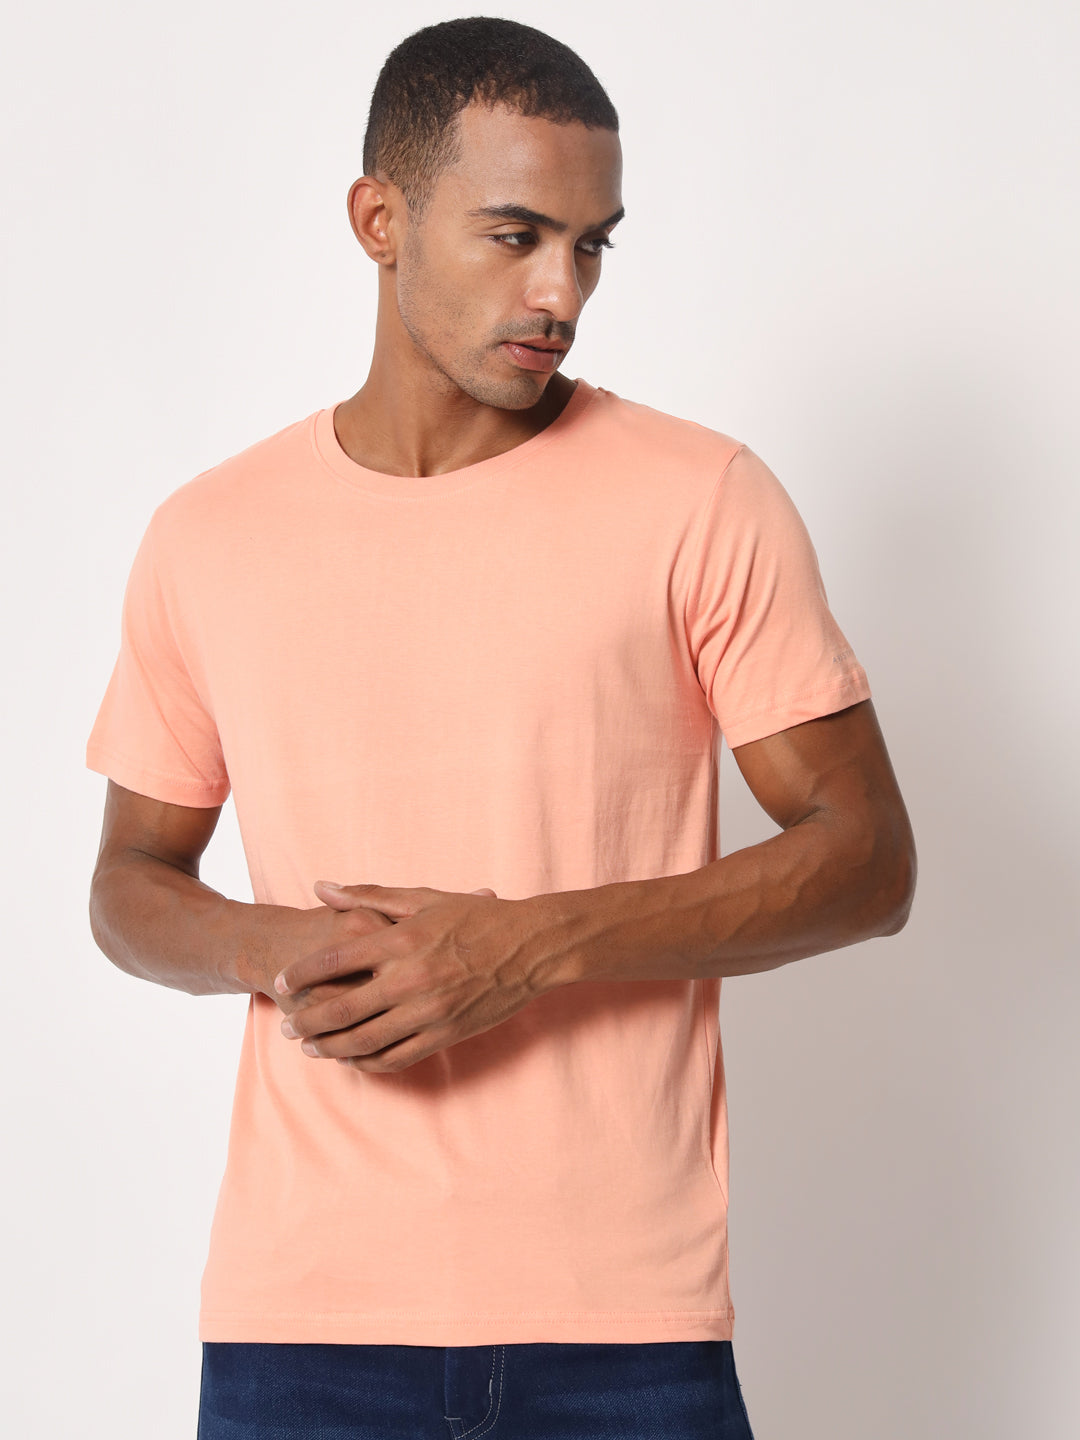 Men's-T-Shirt-peach